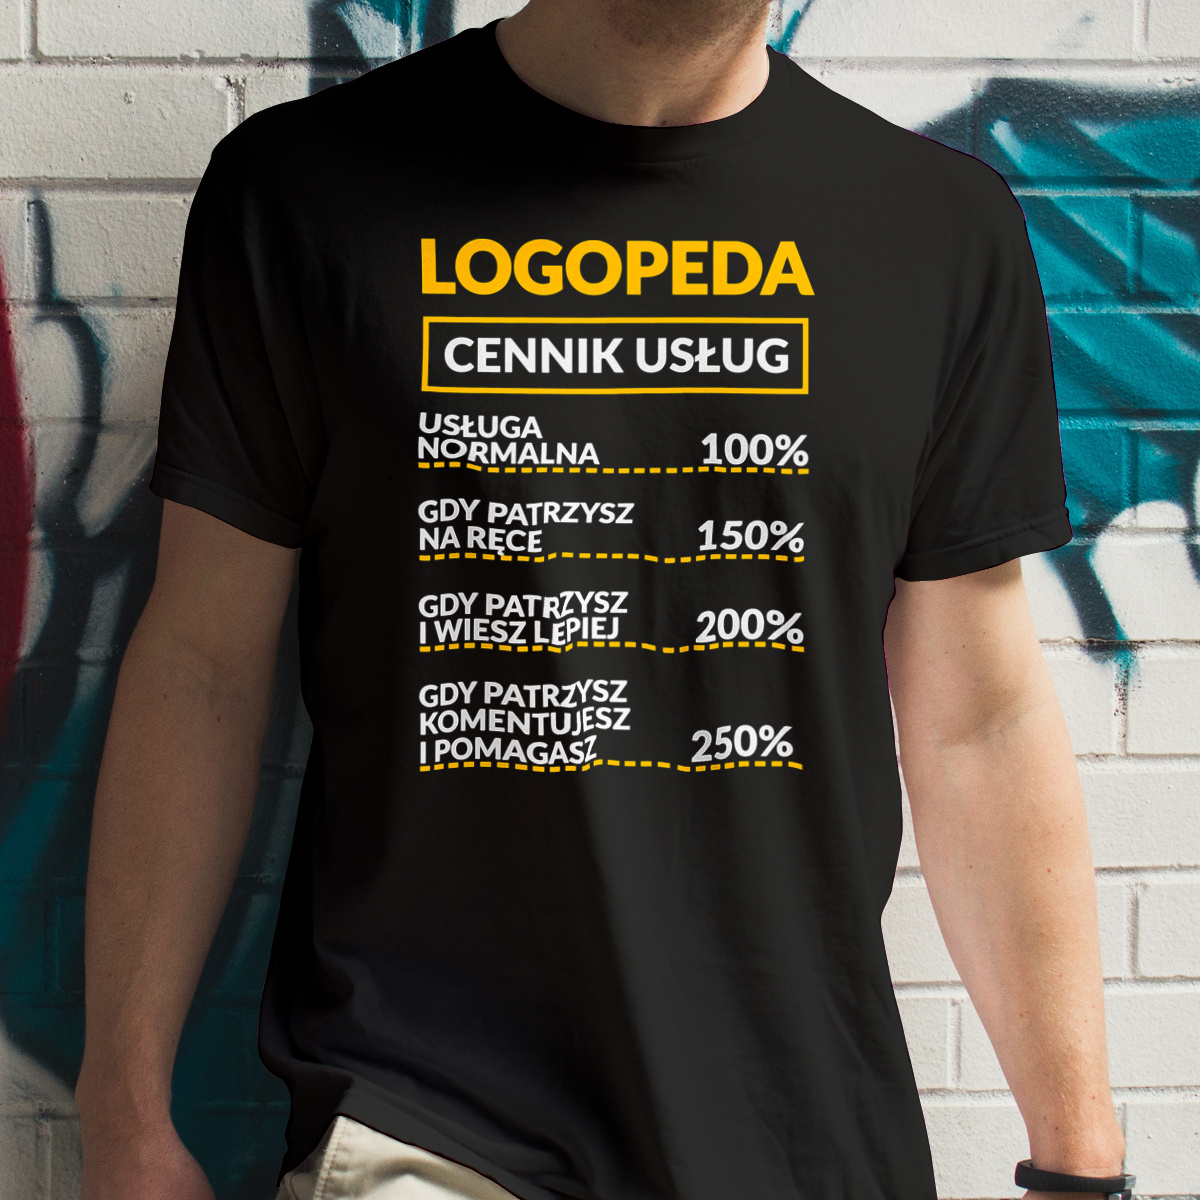 Logopeda - Cennik Usług - Męska Koszulka Czarna